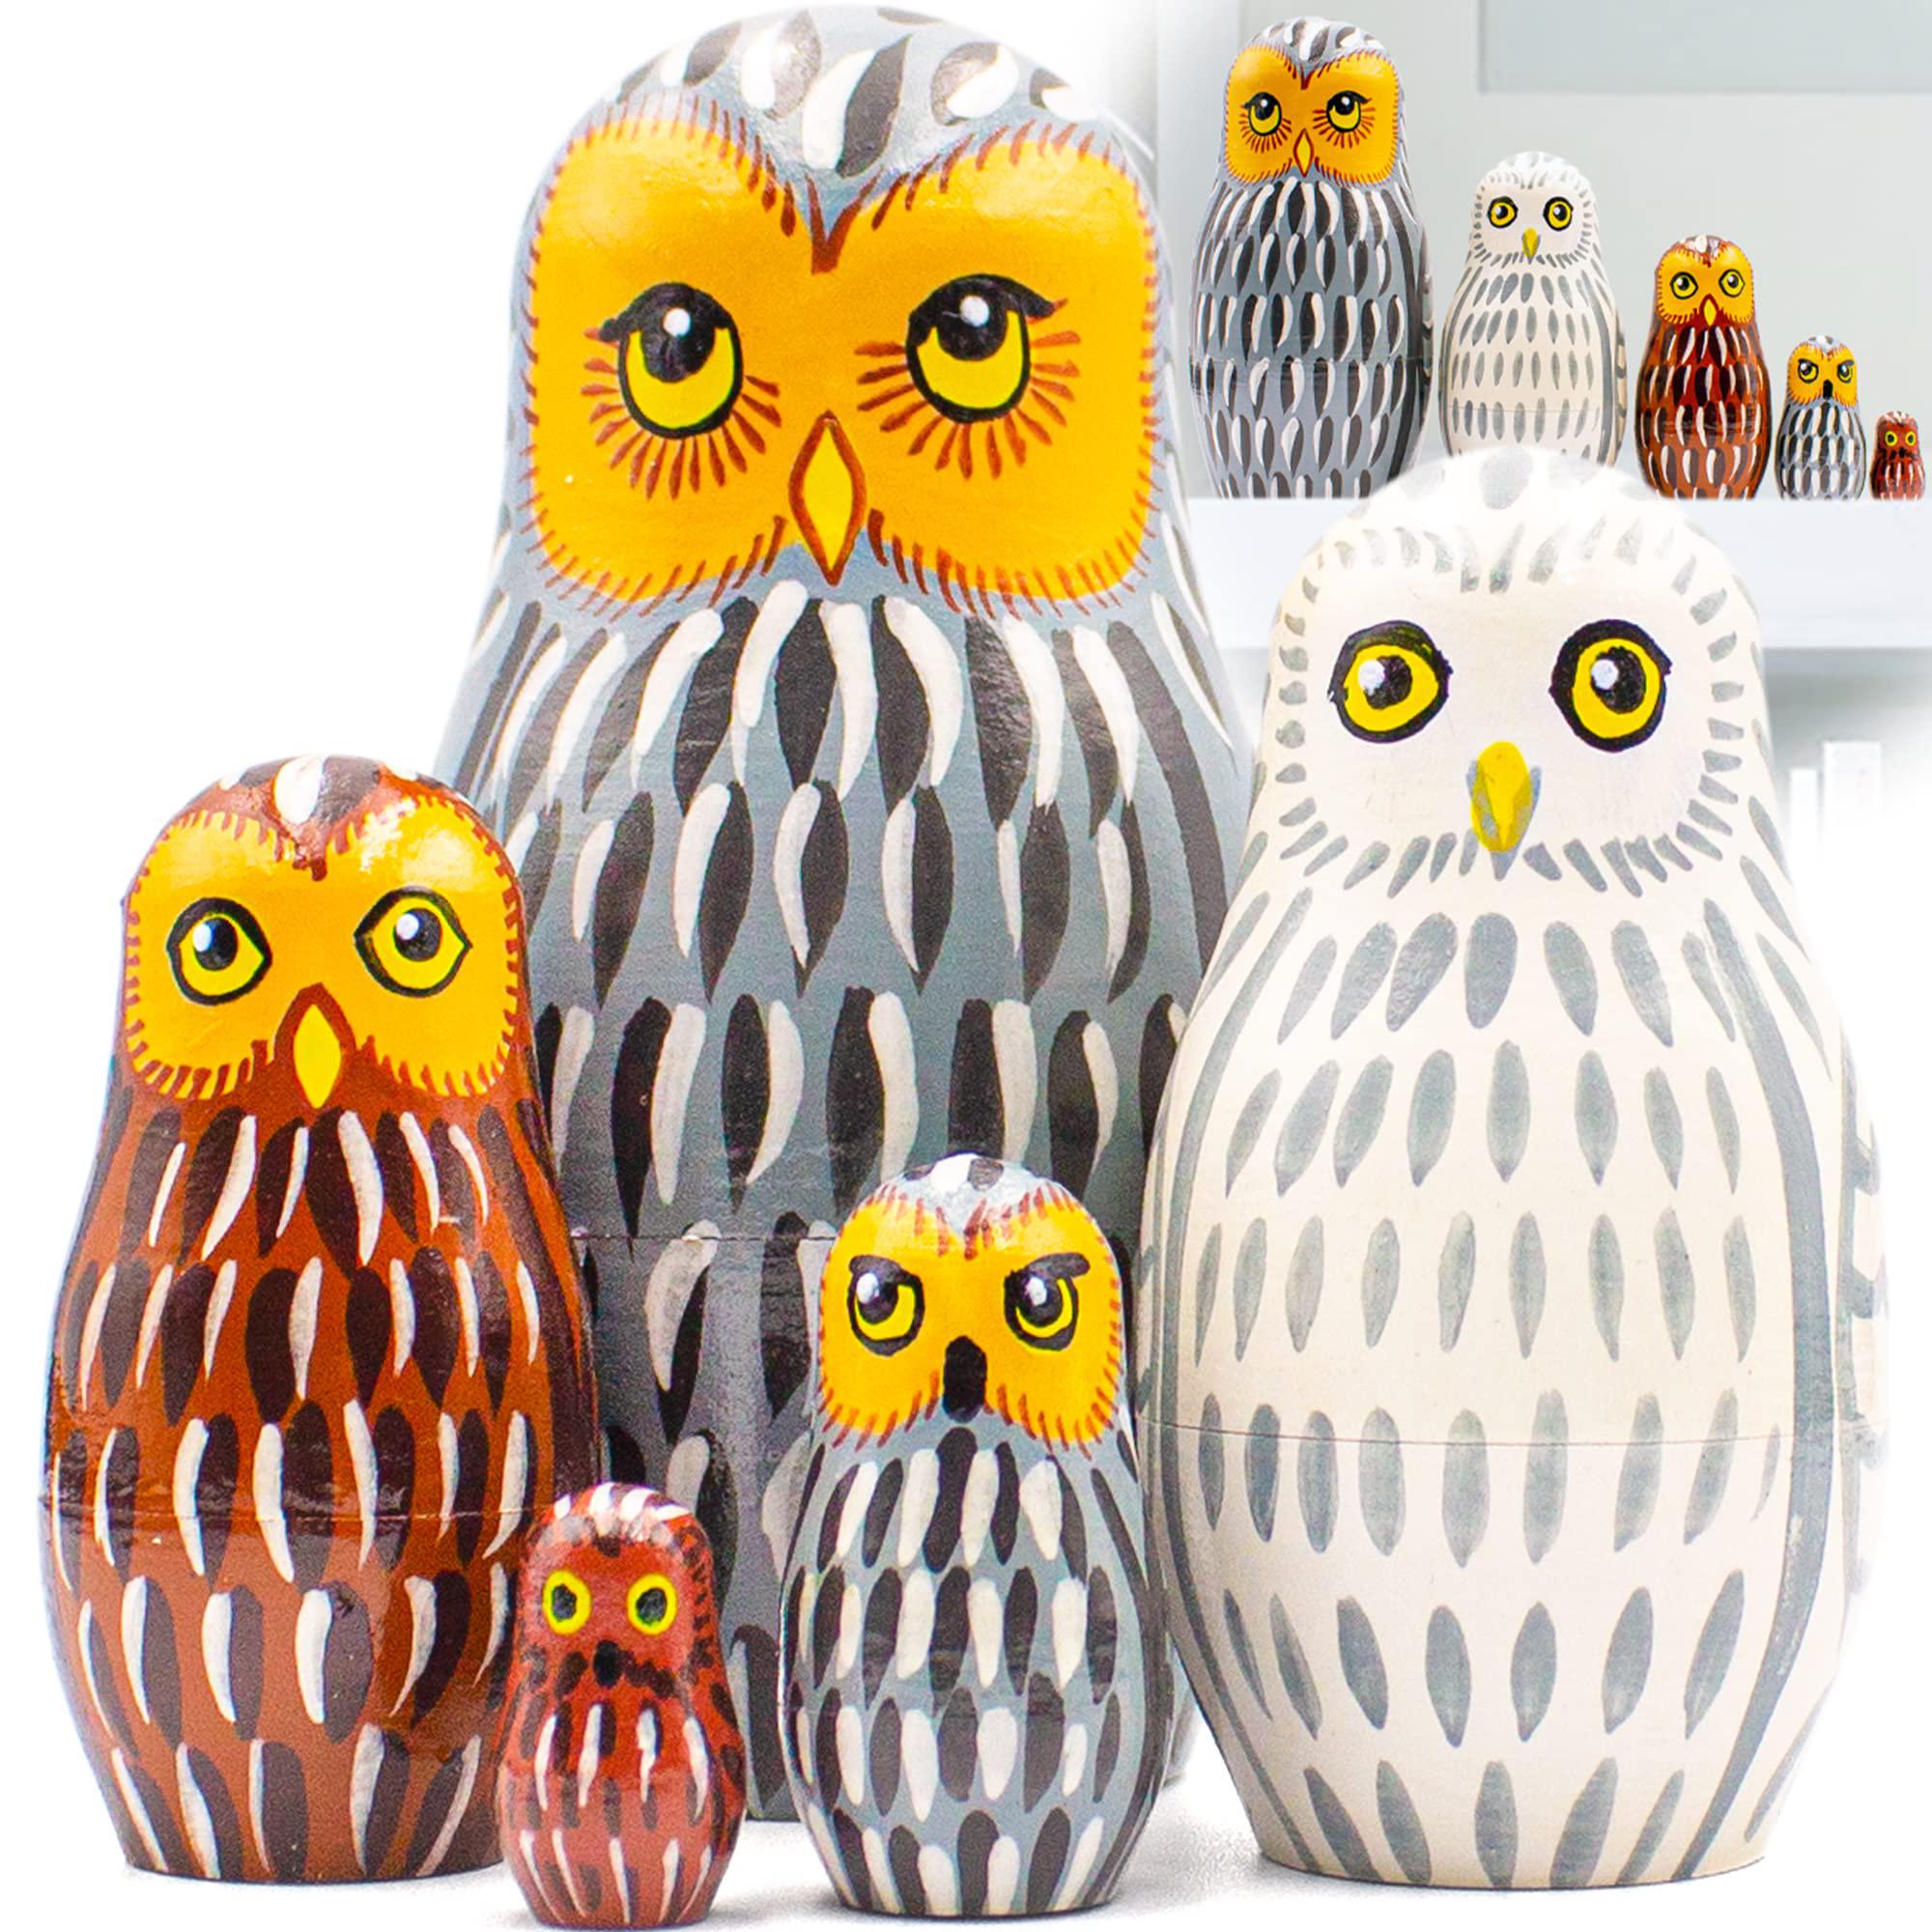 AEVVV owl nesting dolls set of 5 pcs - matryoshka doll with decorative owl figurines - owl stuff - owl gifts - wood owl decor - owl